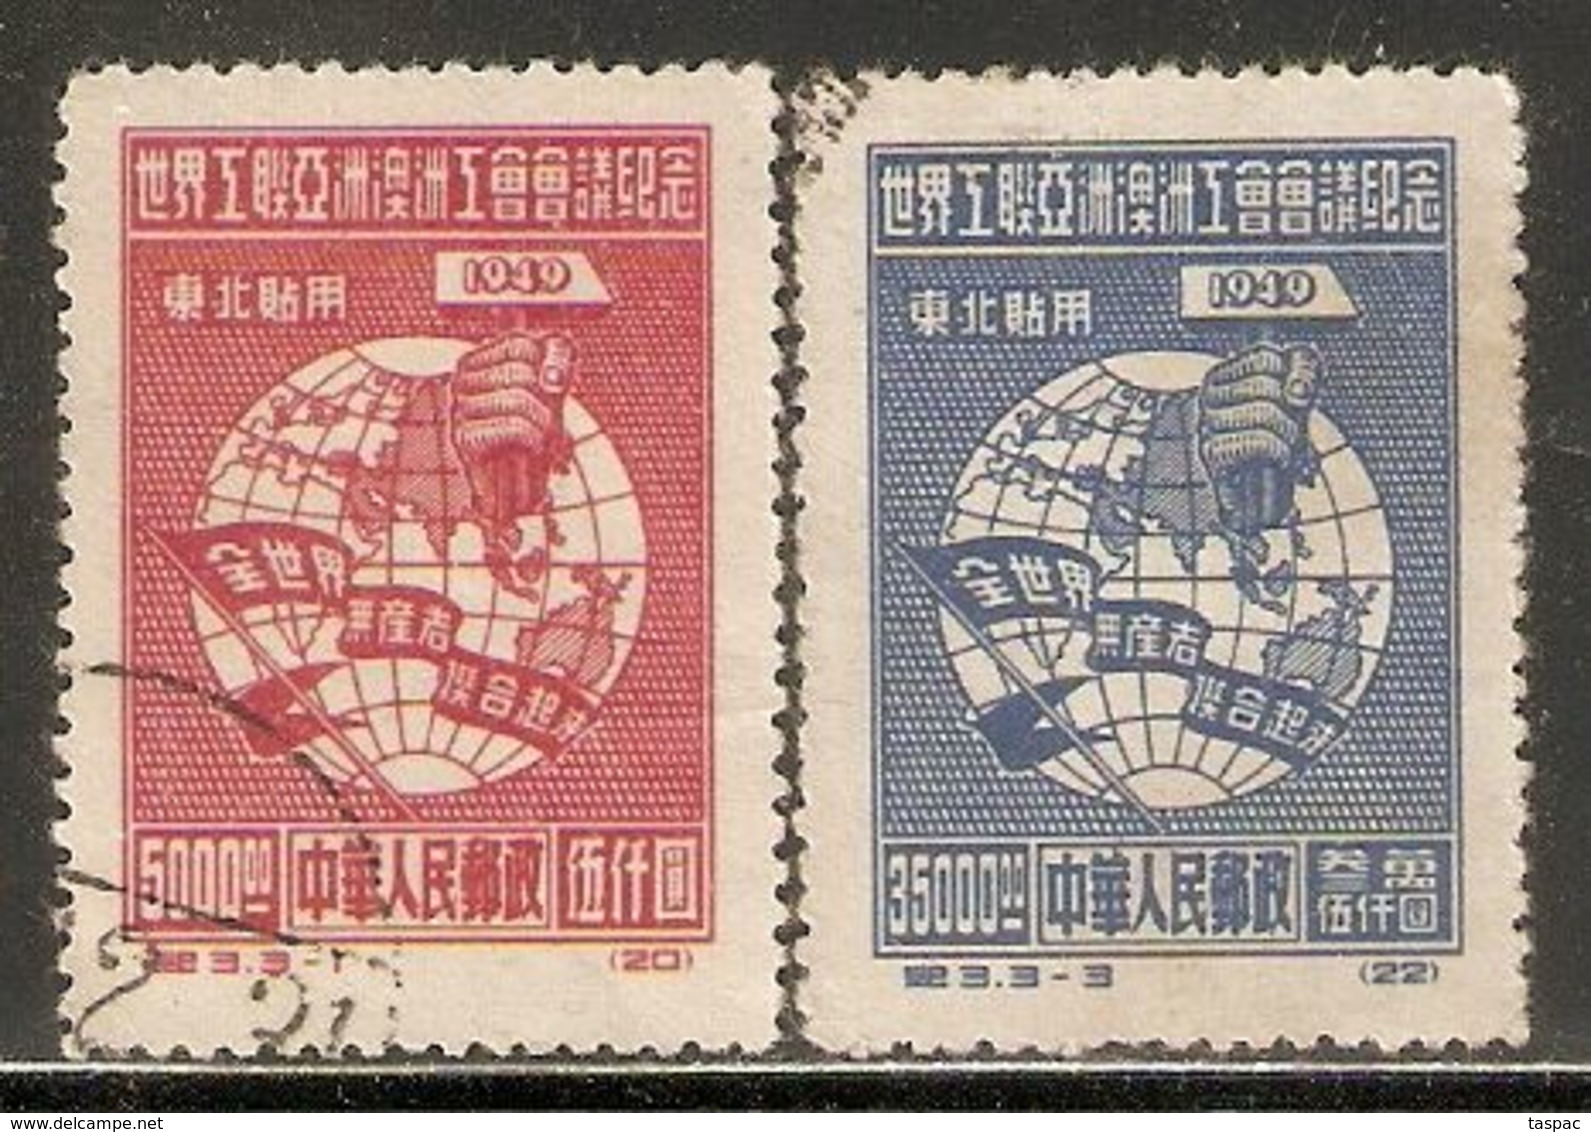 Northeast China 1949 Mi# 155, 157 II Used - Short Set - Reprints - Globe And Hammer - Cina Del Nord 1949-50